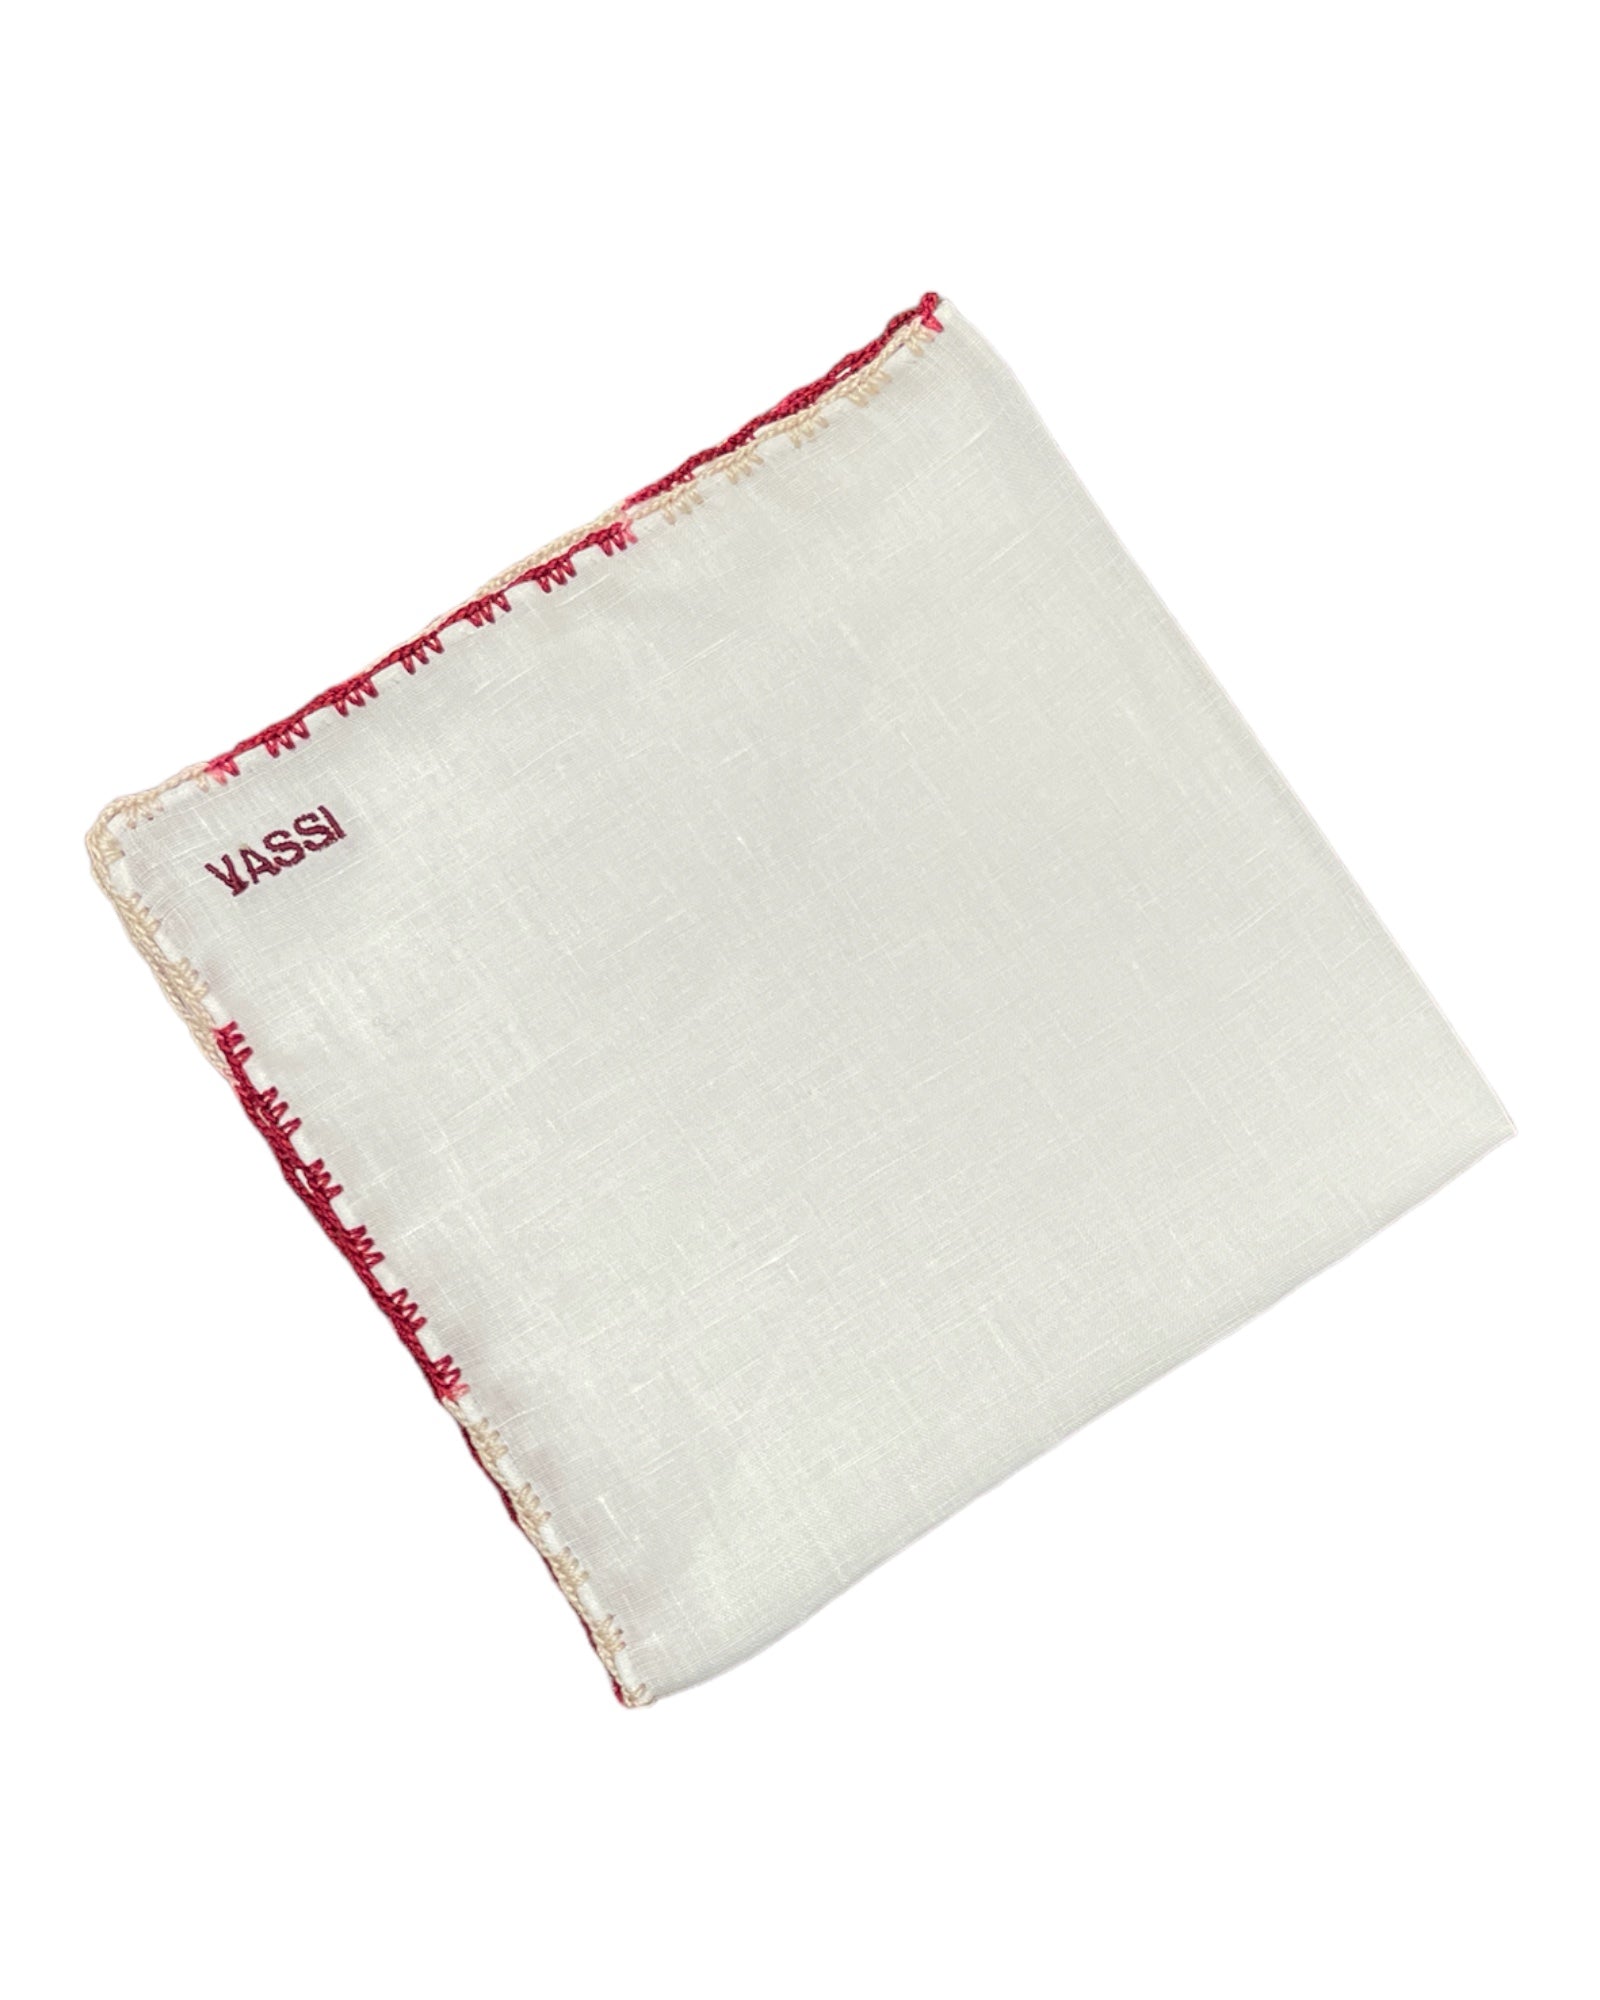 White Linen Pocket Square With Handrolled Triple V- Stitch Pocket SquareBurgundy-Beige